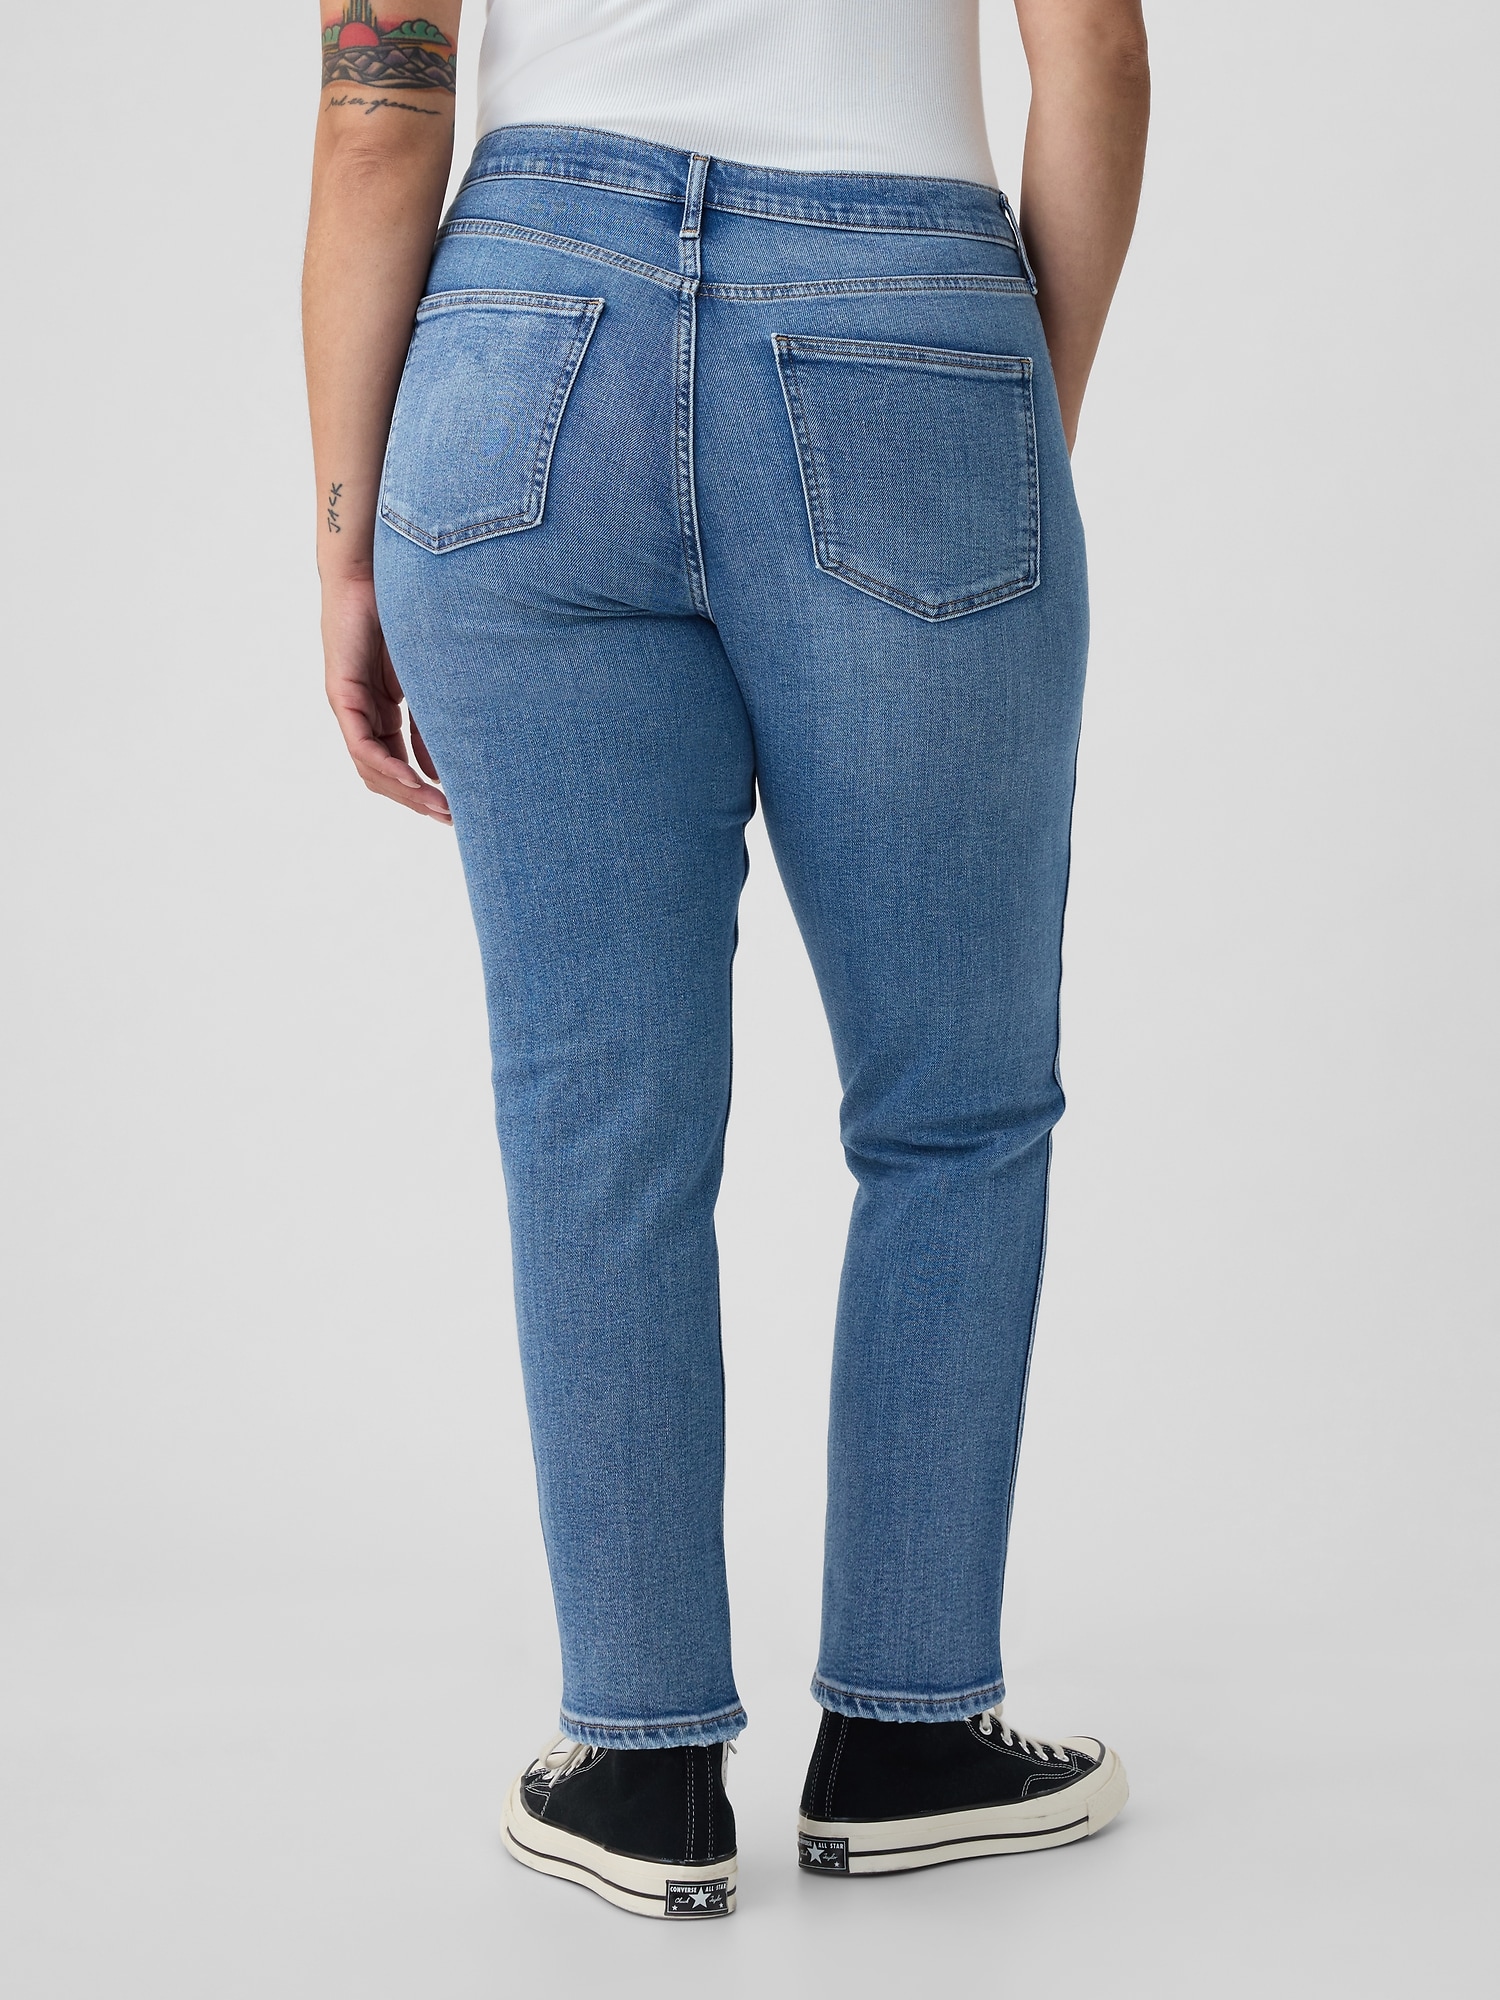 Gap 1969 Women's Slim Straight Mid Rise Blue Denim Jeans Size 4 R Stretch  NEW